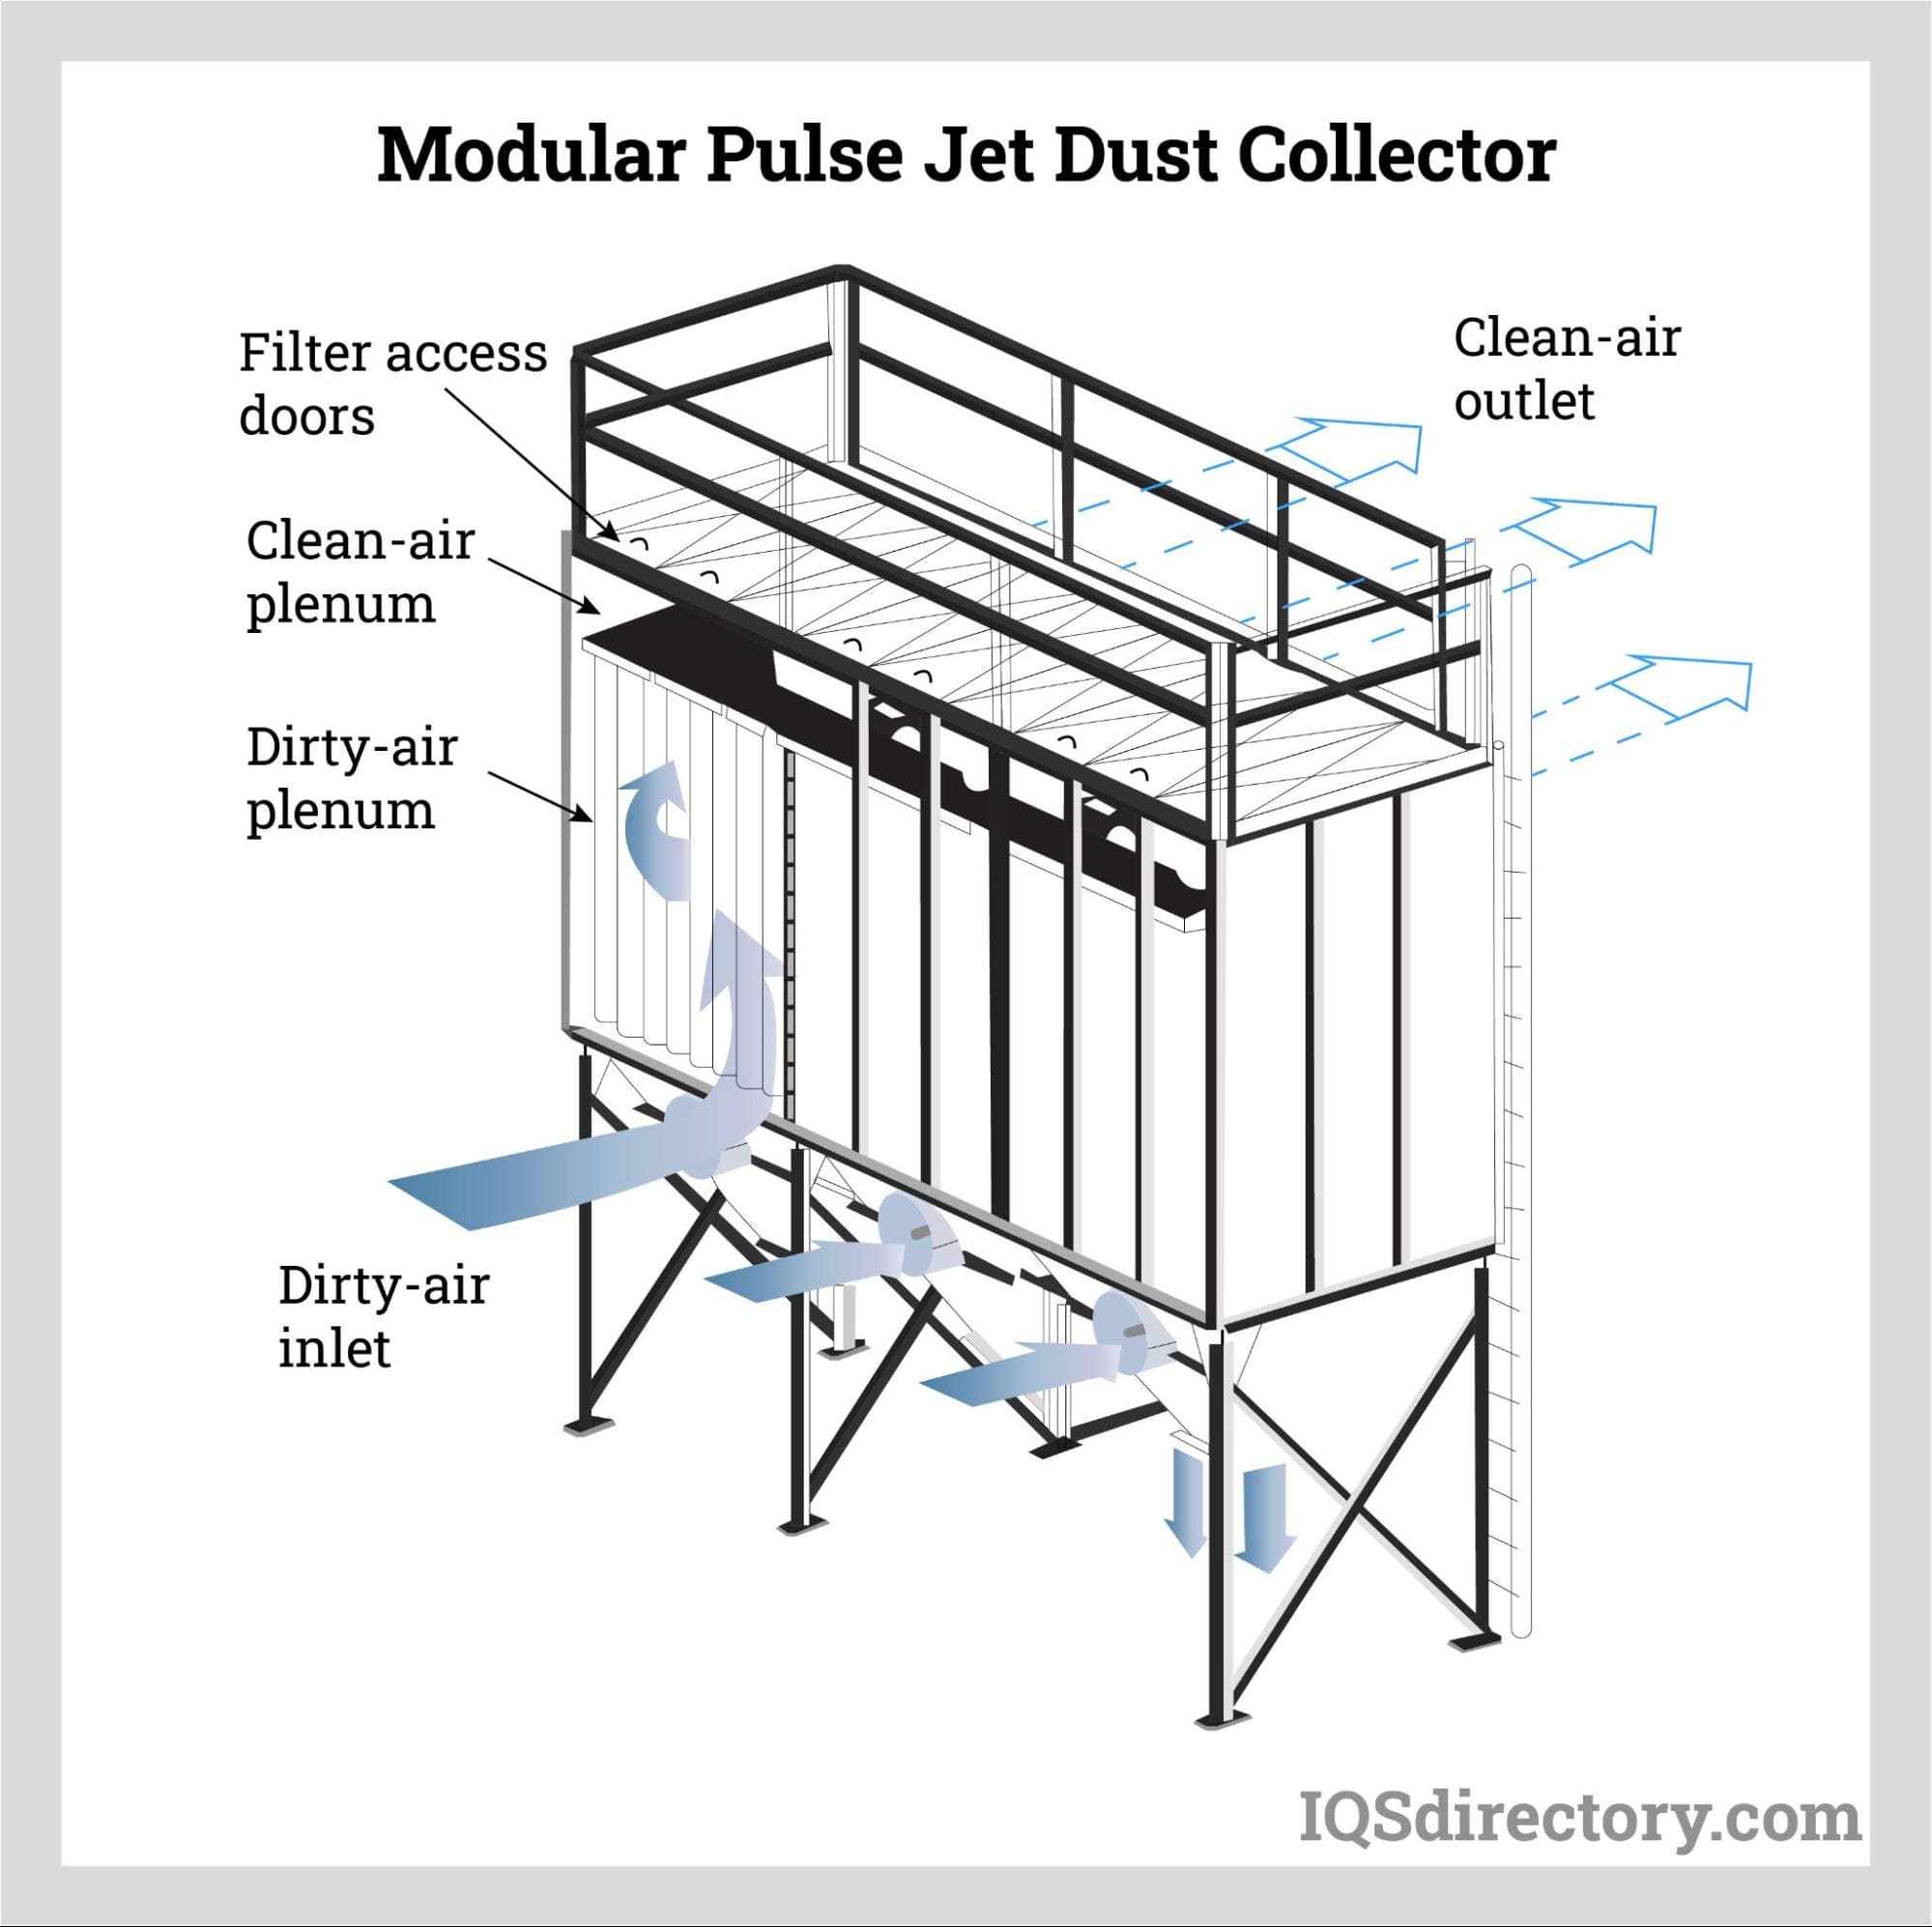 Modular Pulse Jet Dust Collector